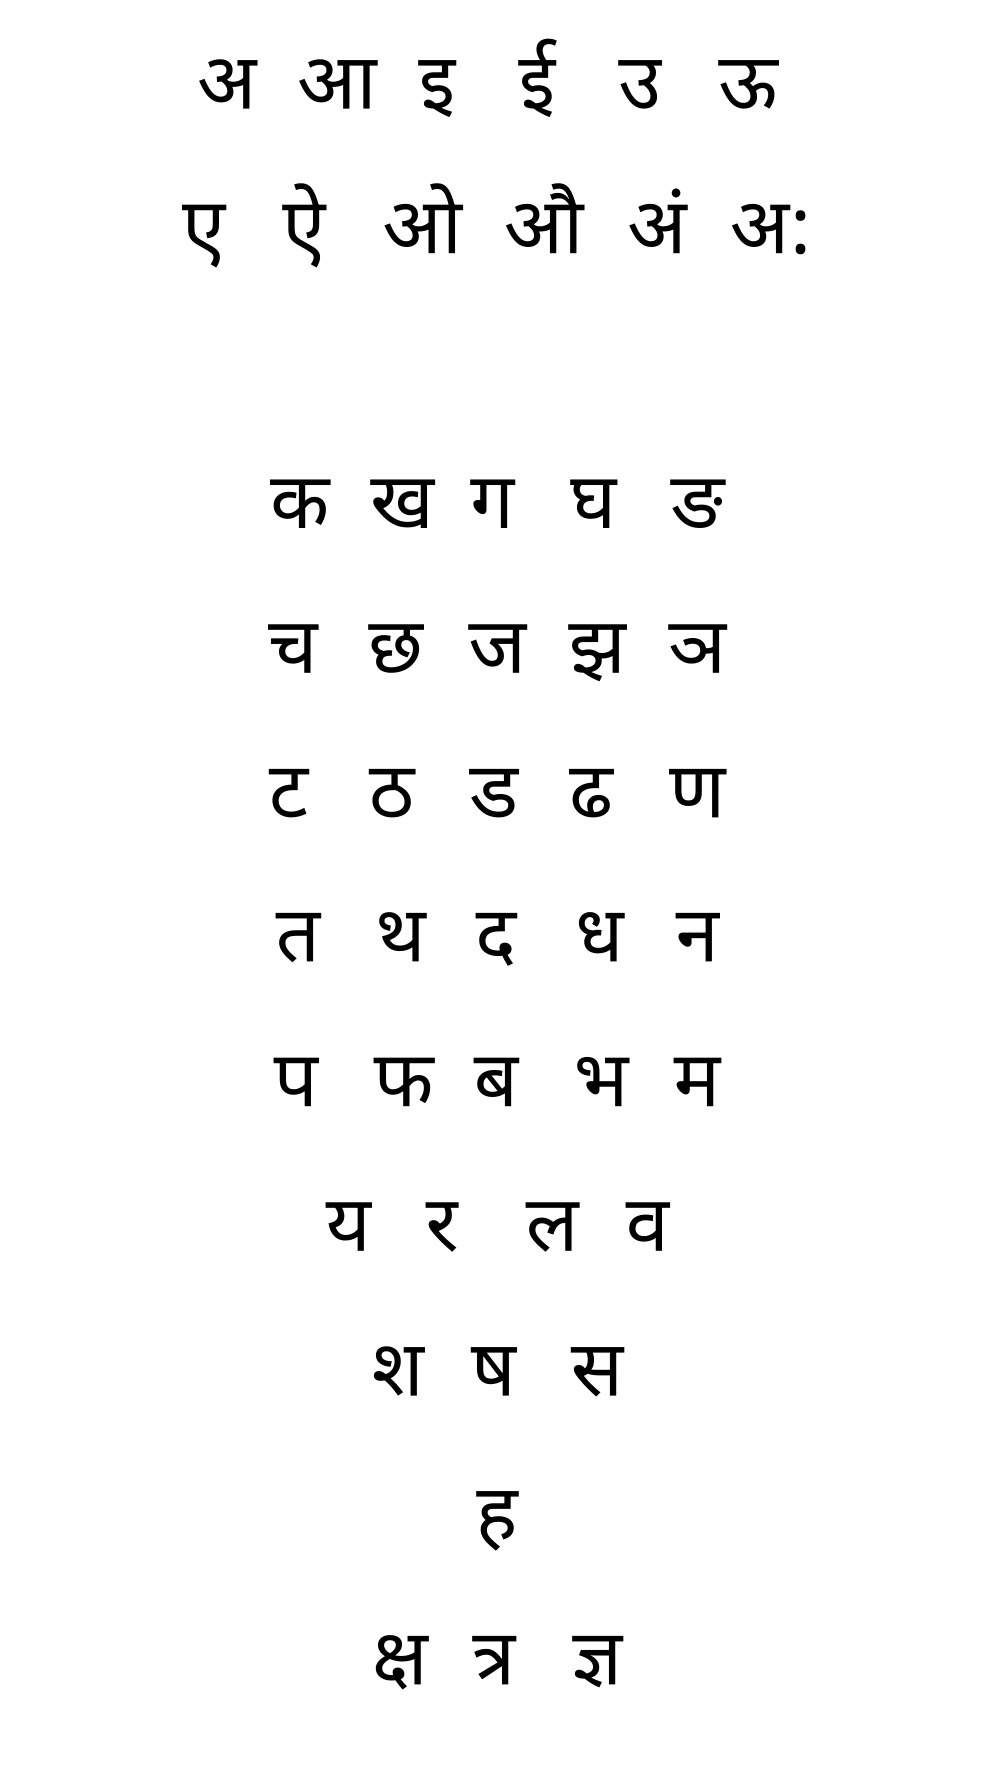 david written in devanagari script example